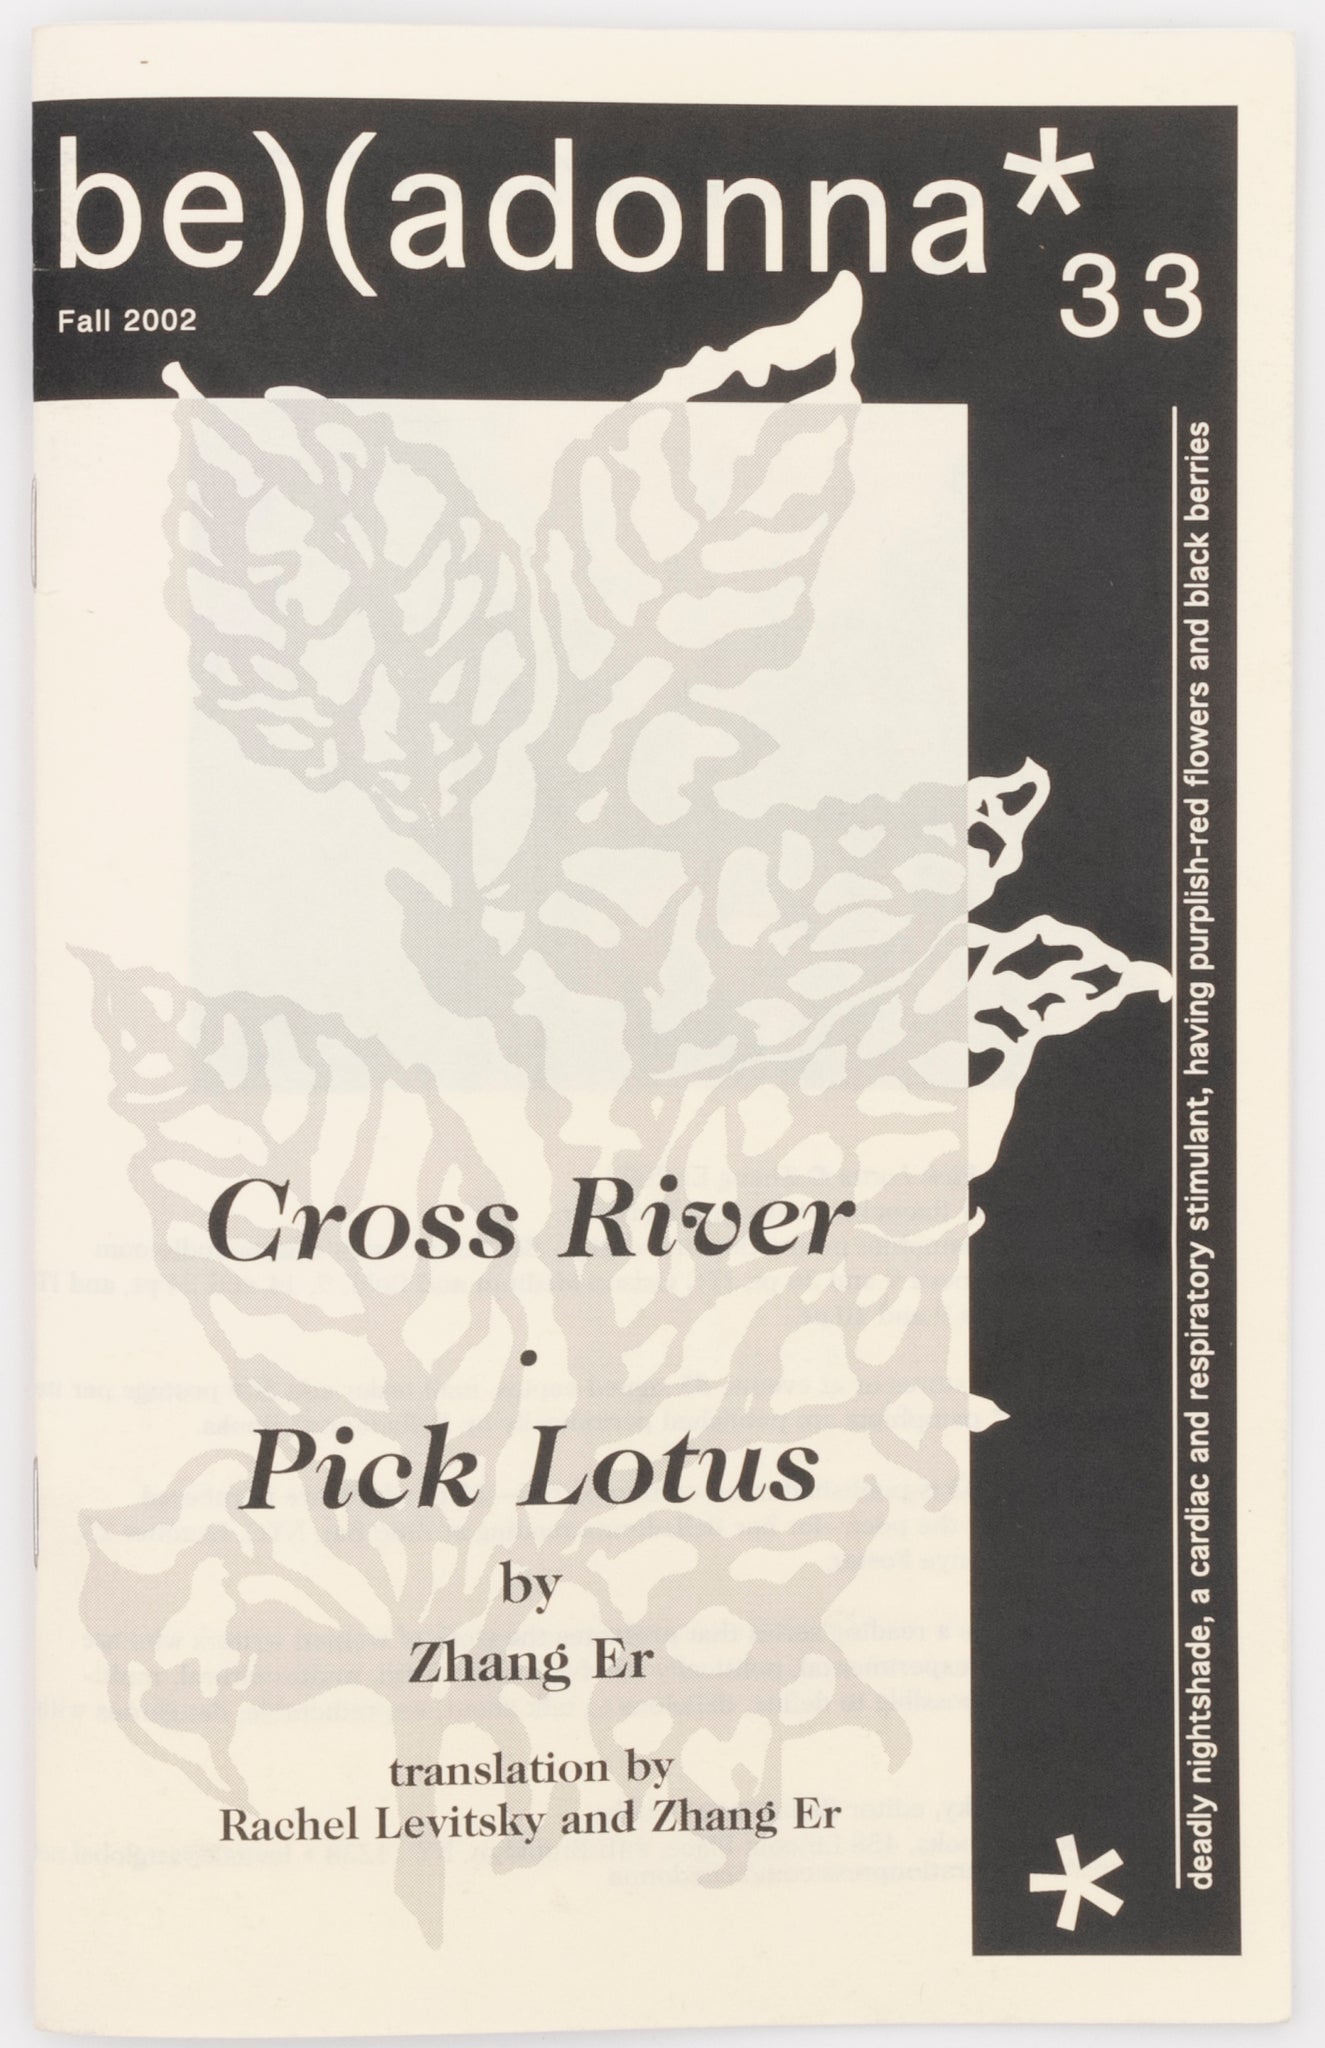 Cross River, Pick Lotus (Belladonna* #33)